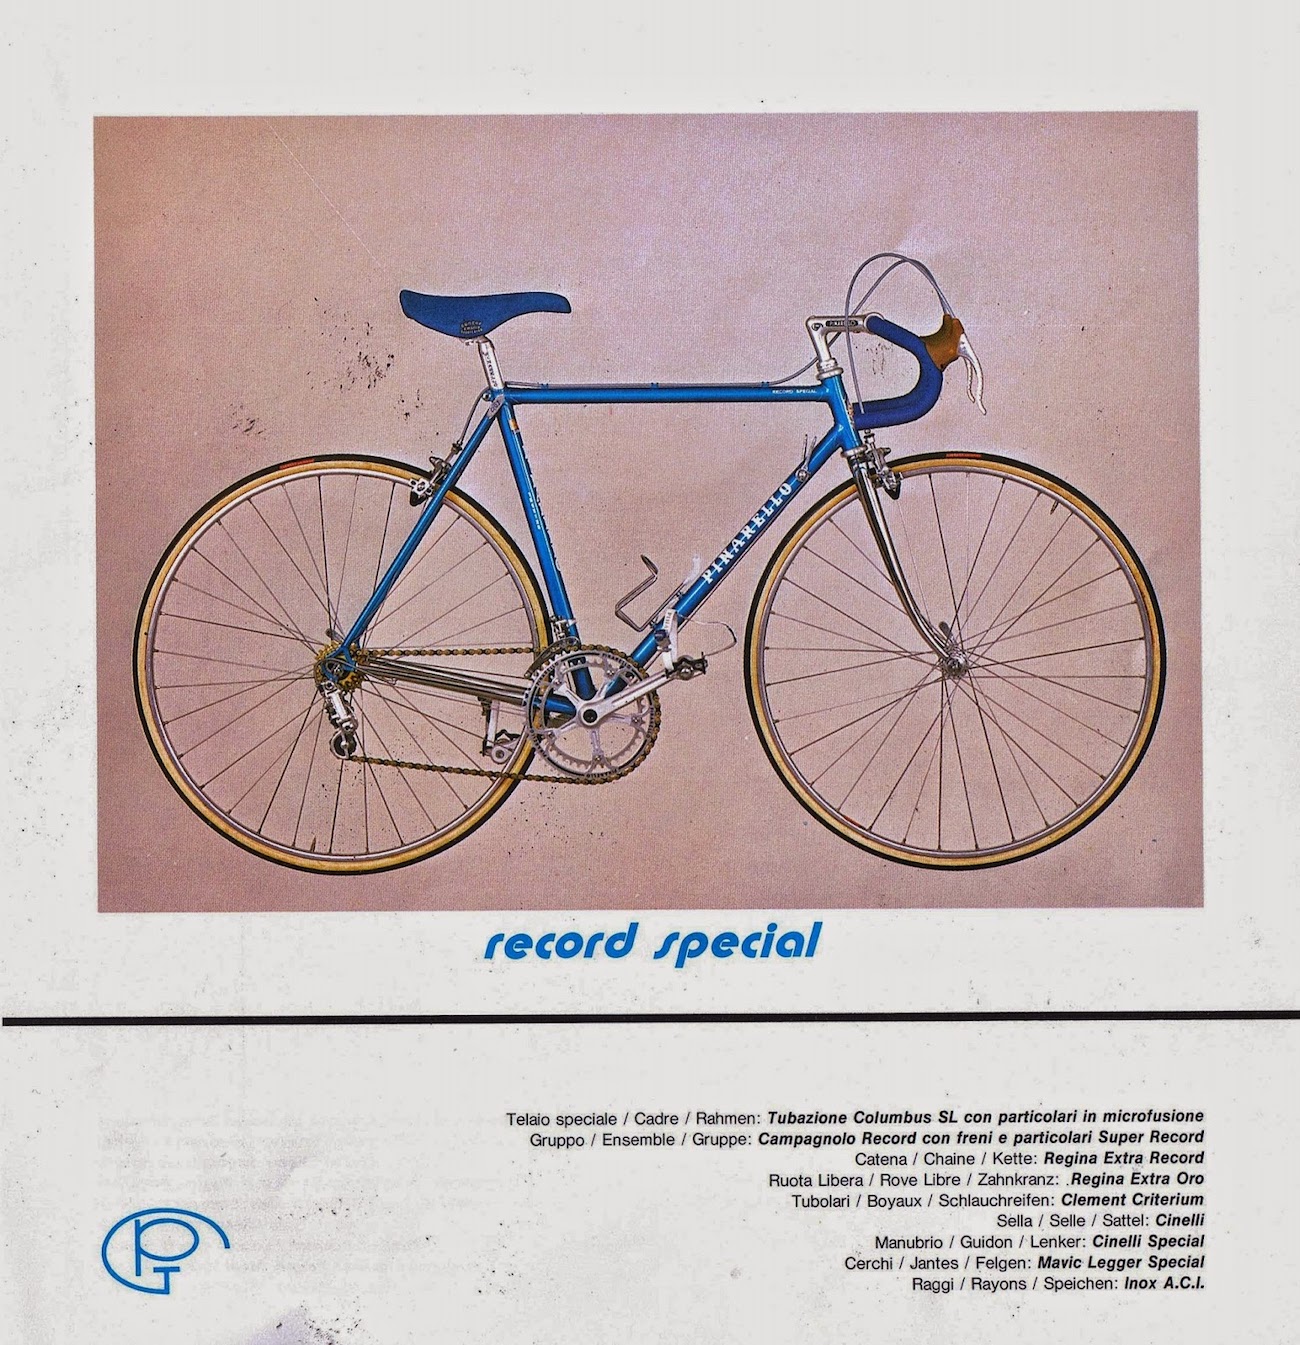 012_Pinarello-Record-Special-Catalogue-1979-Road-Bike-Restoration-by-Falko-Schloetel-Germany-2019.jpg